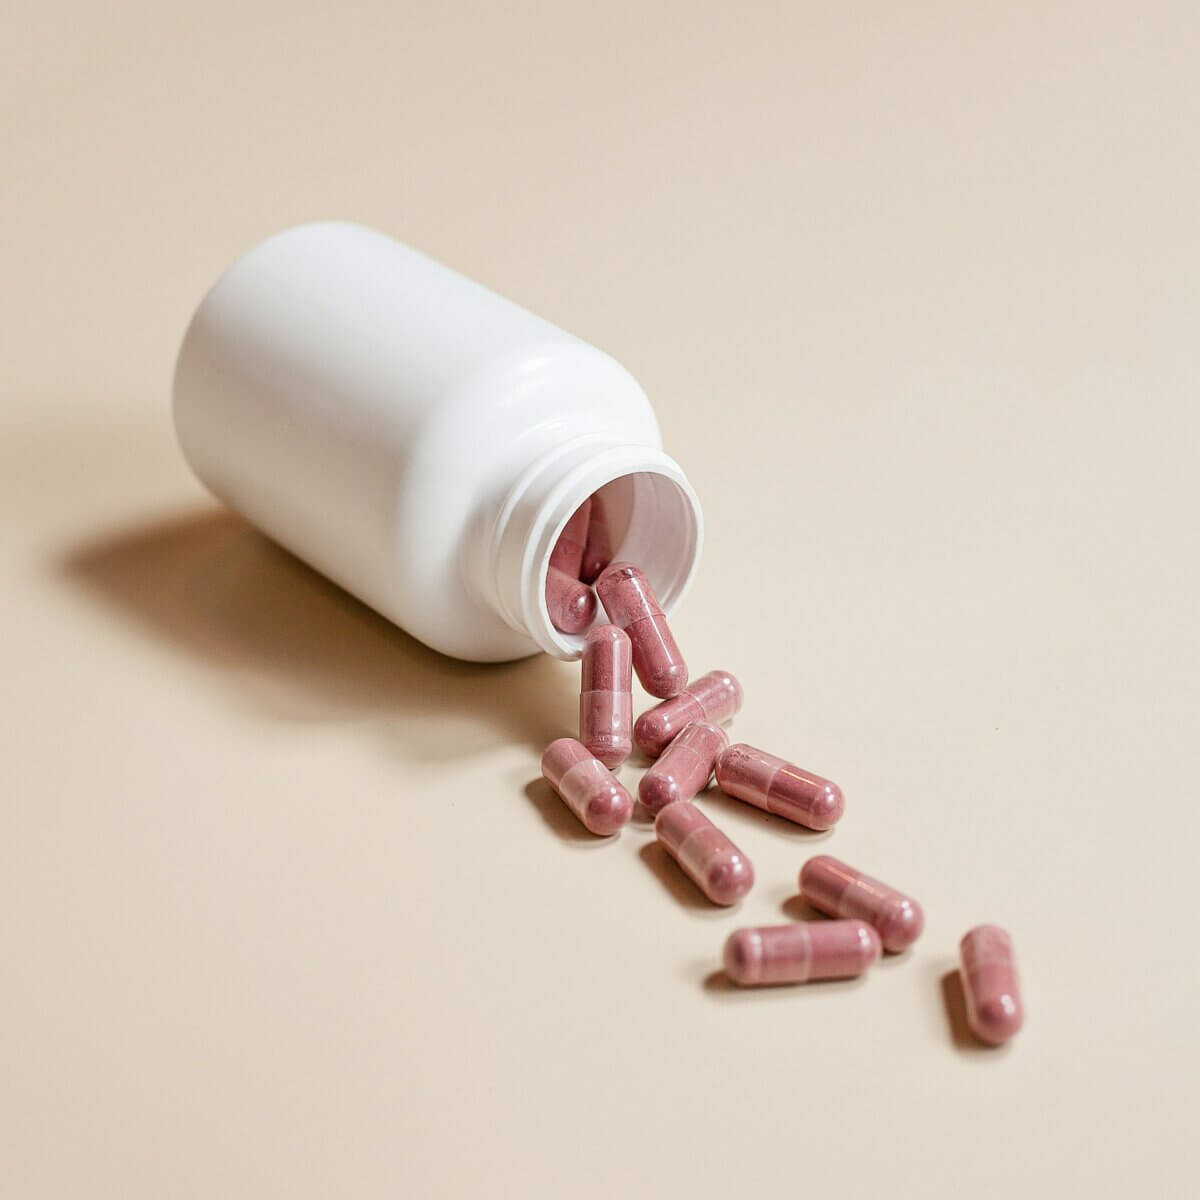 Red supplement capsules